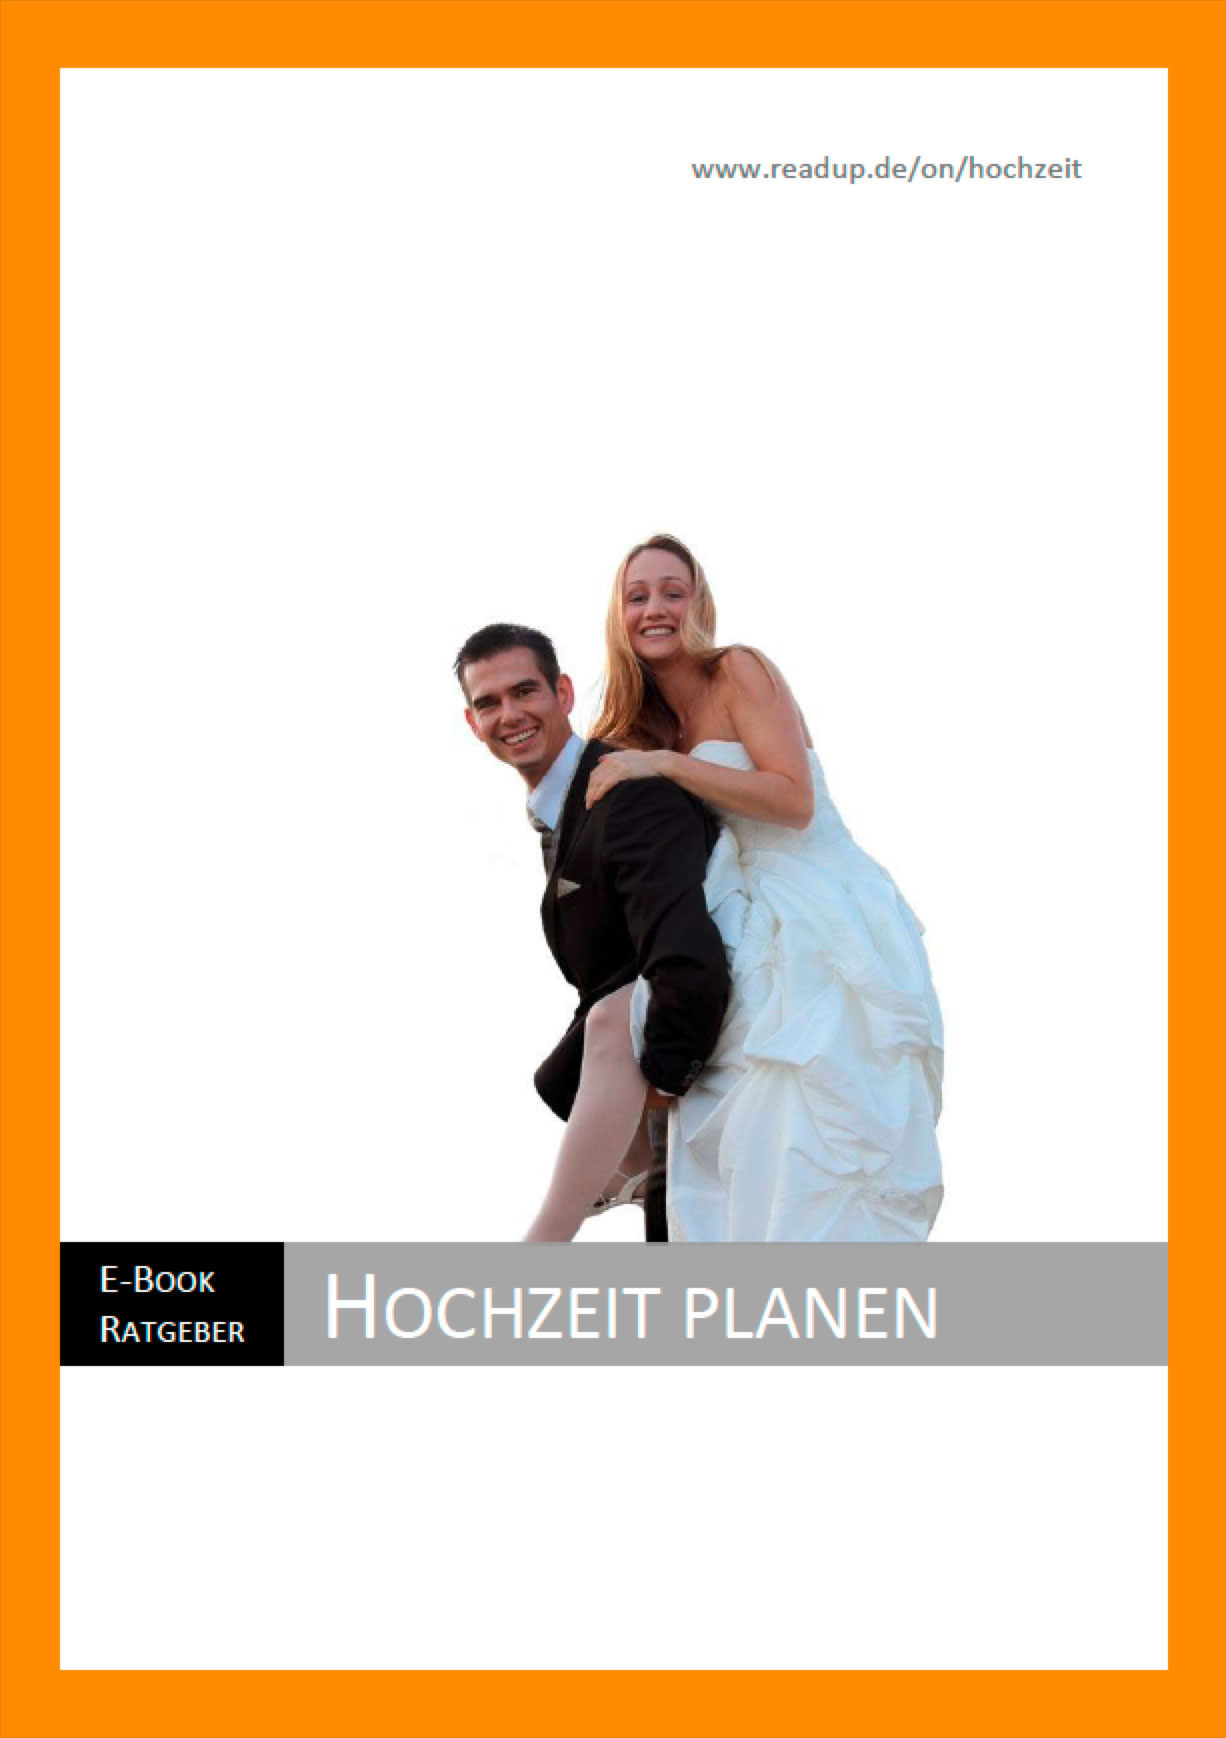 Der E-Book Ratgeber "Hochzeit planen"